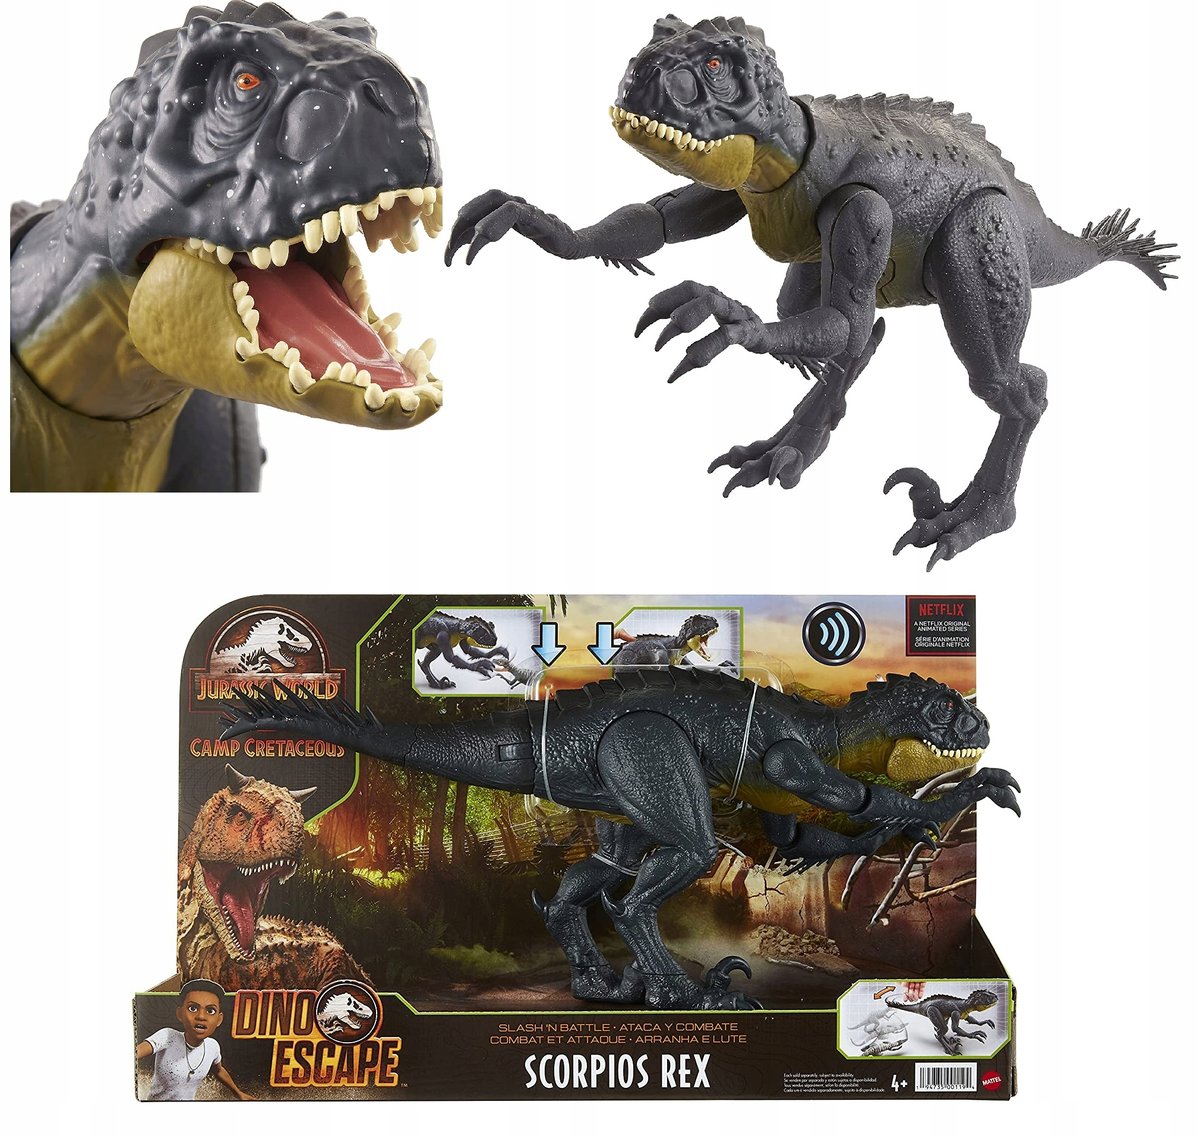 Zdjęcia - Figurka / zabawka transformująca Mattel jurassic World: Camp Cretaceous Dino Escape figurka akcji Slash 'n Battle 